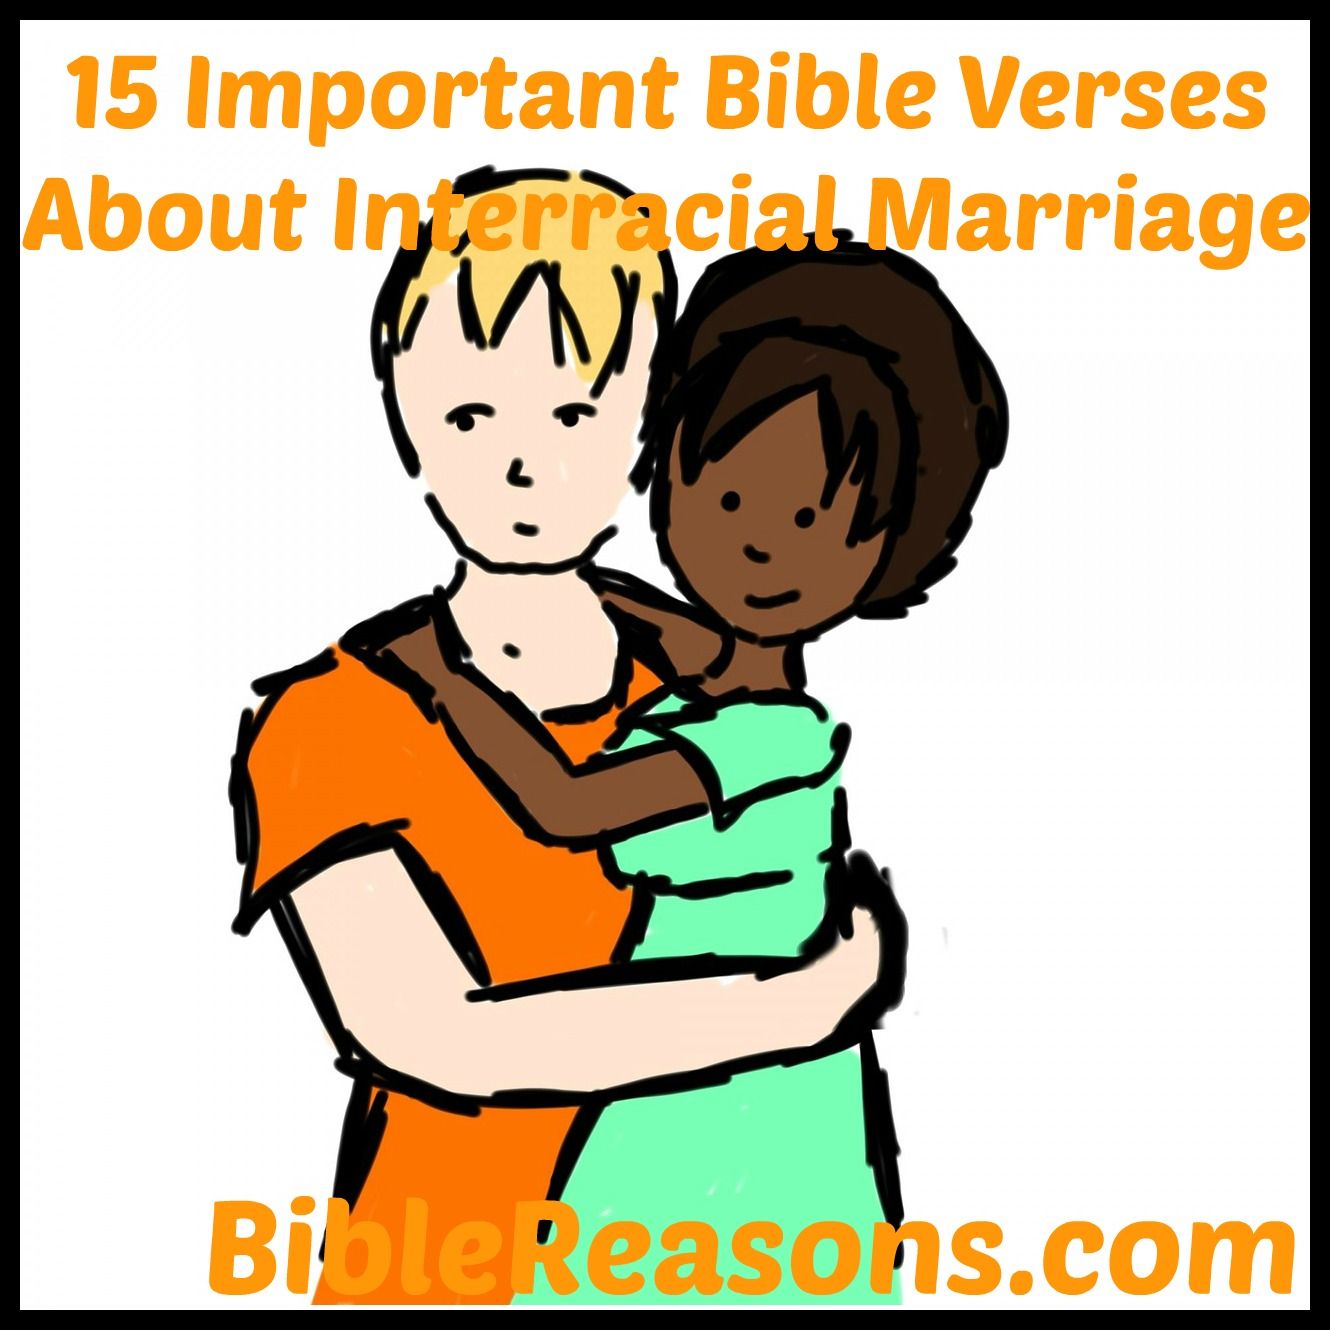 Bible verses for interracial marriage